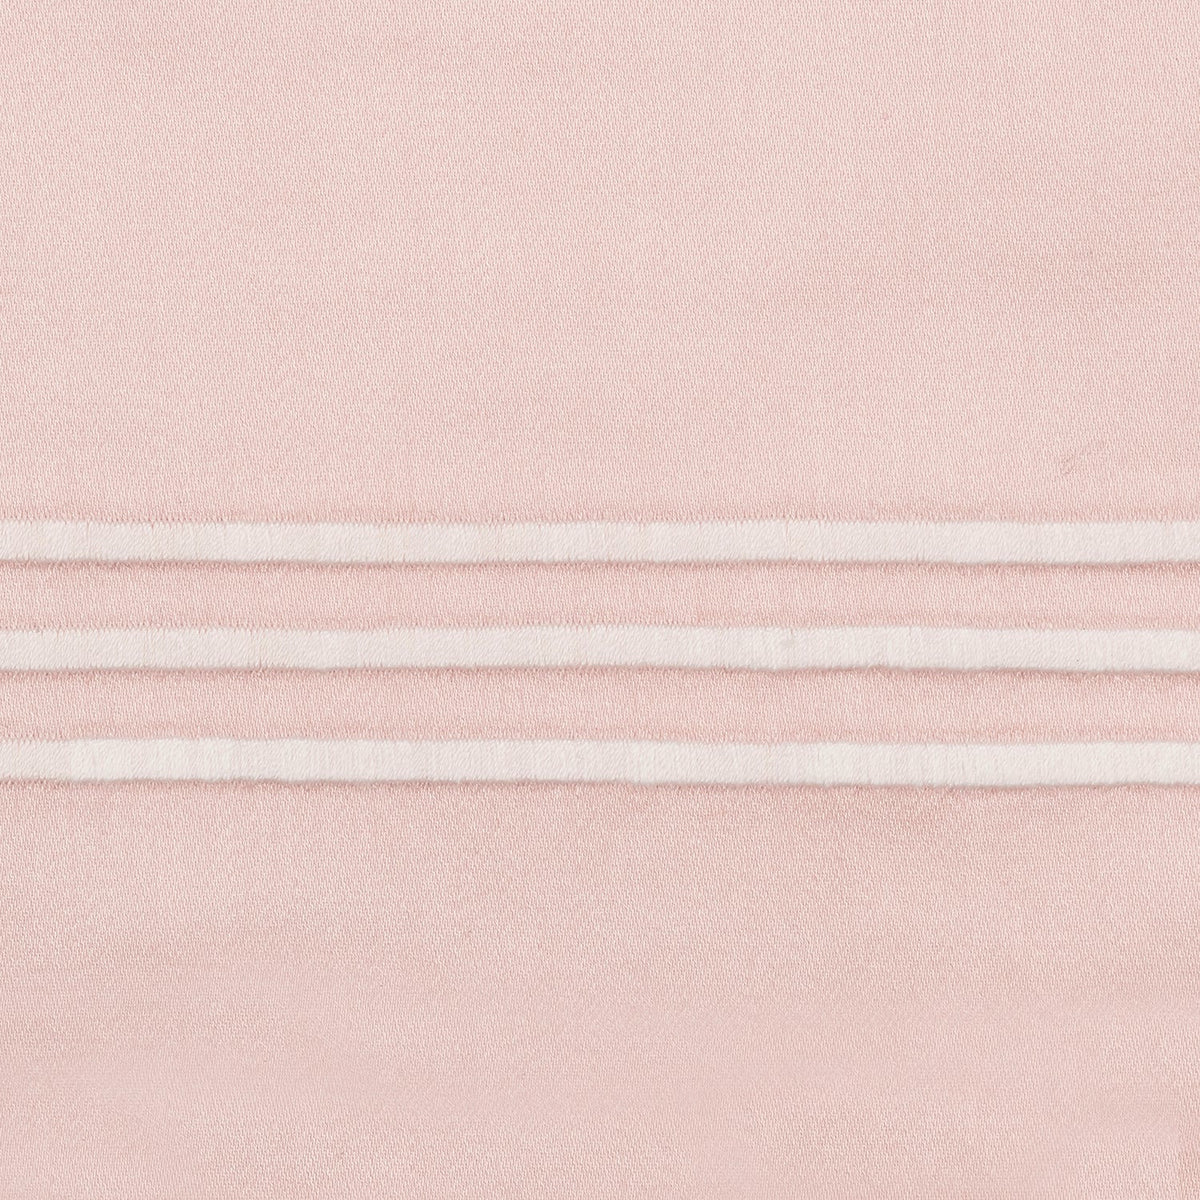 Matouk Bel Tempo Nocturne Bedding Swatch Pink Fine Linens